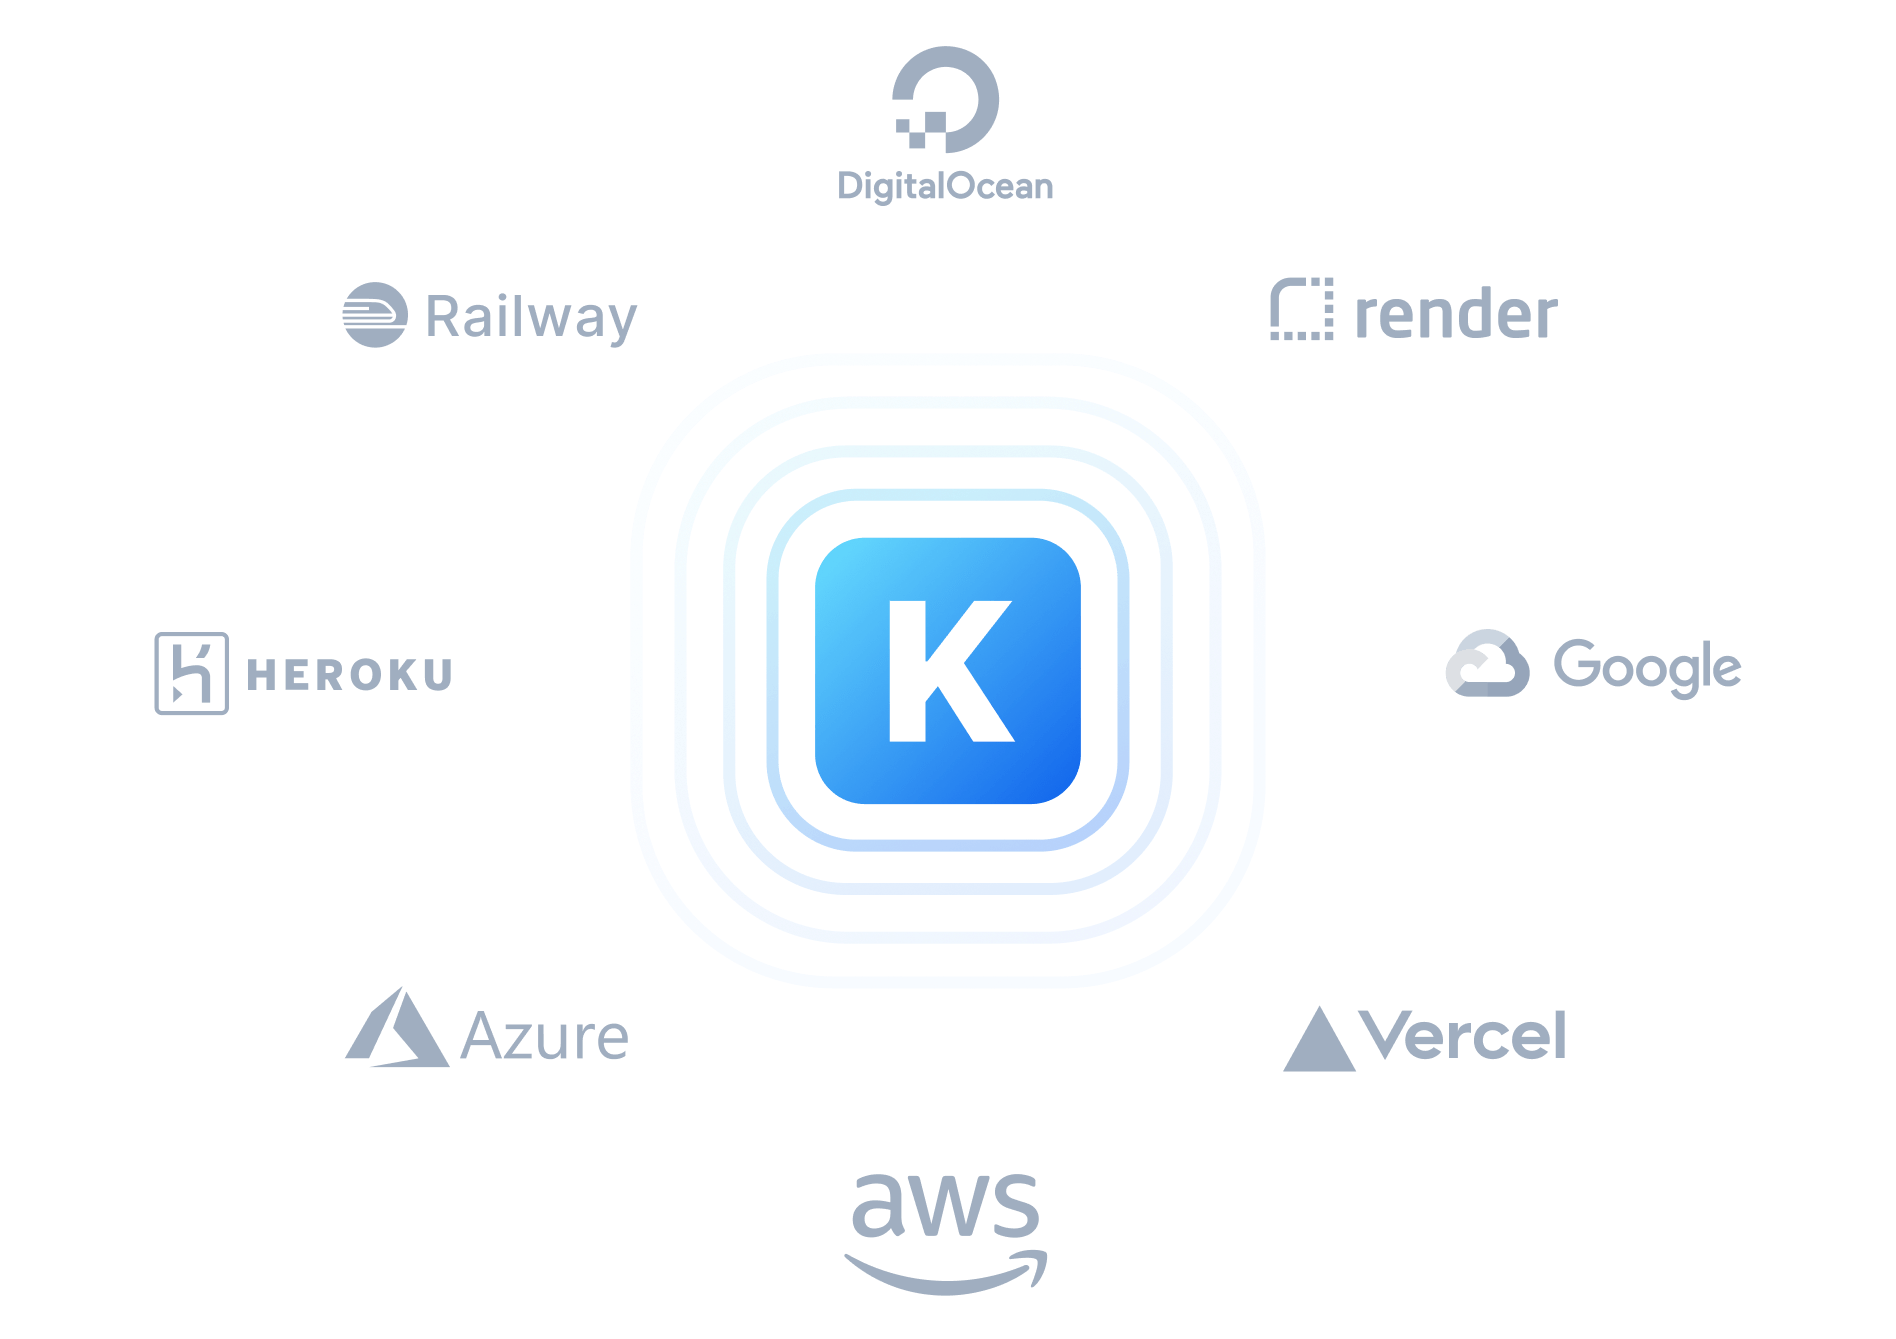 Deploy targets for Keystone are any and all services you've heard of like Digital Ocean, Render, Heroku, Vercel, Google Cloud, AWS, Azure etc